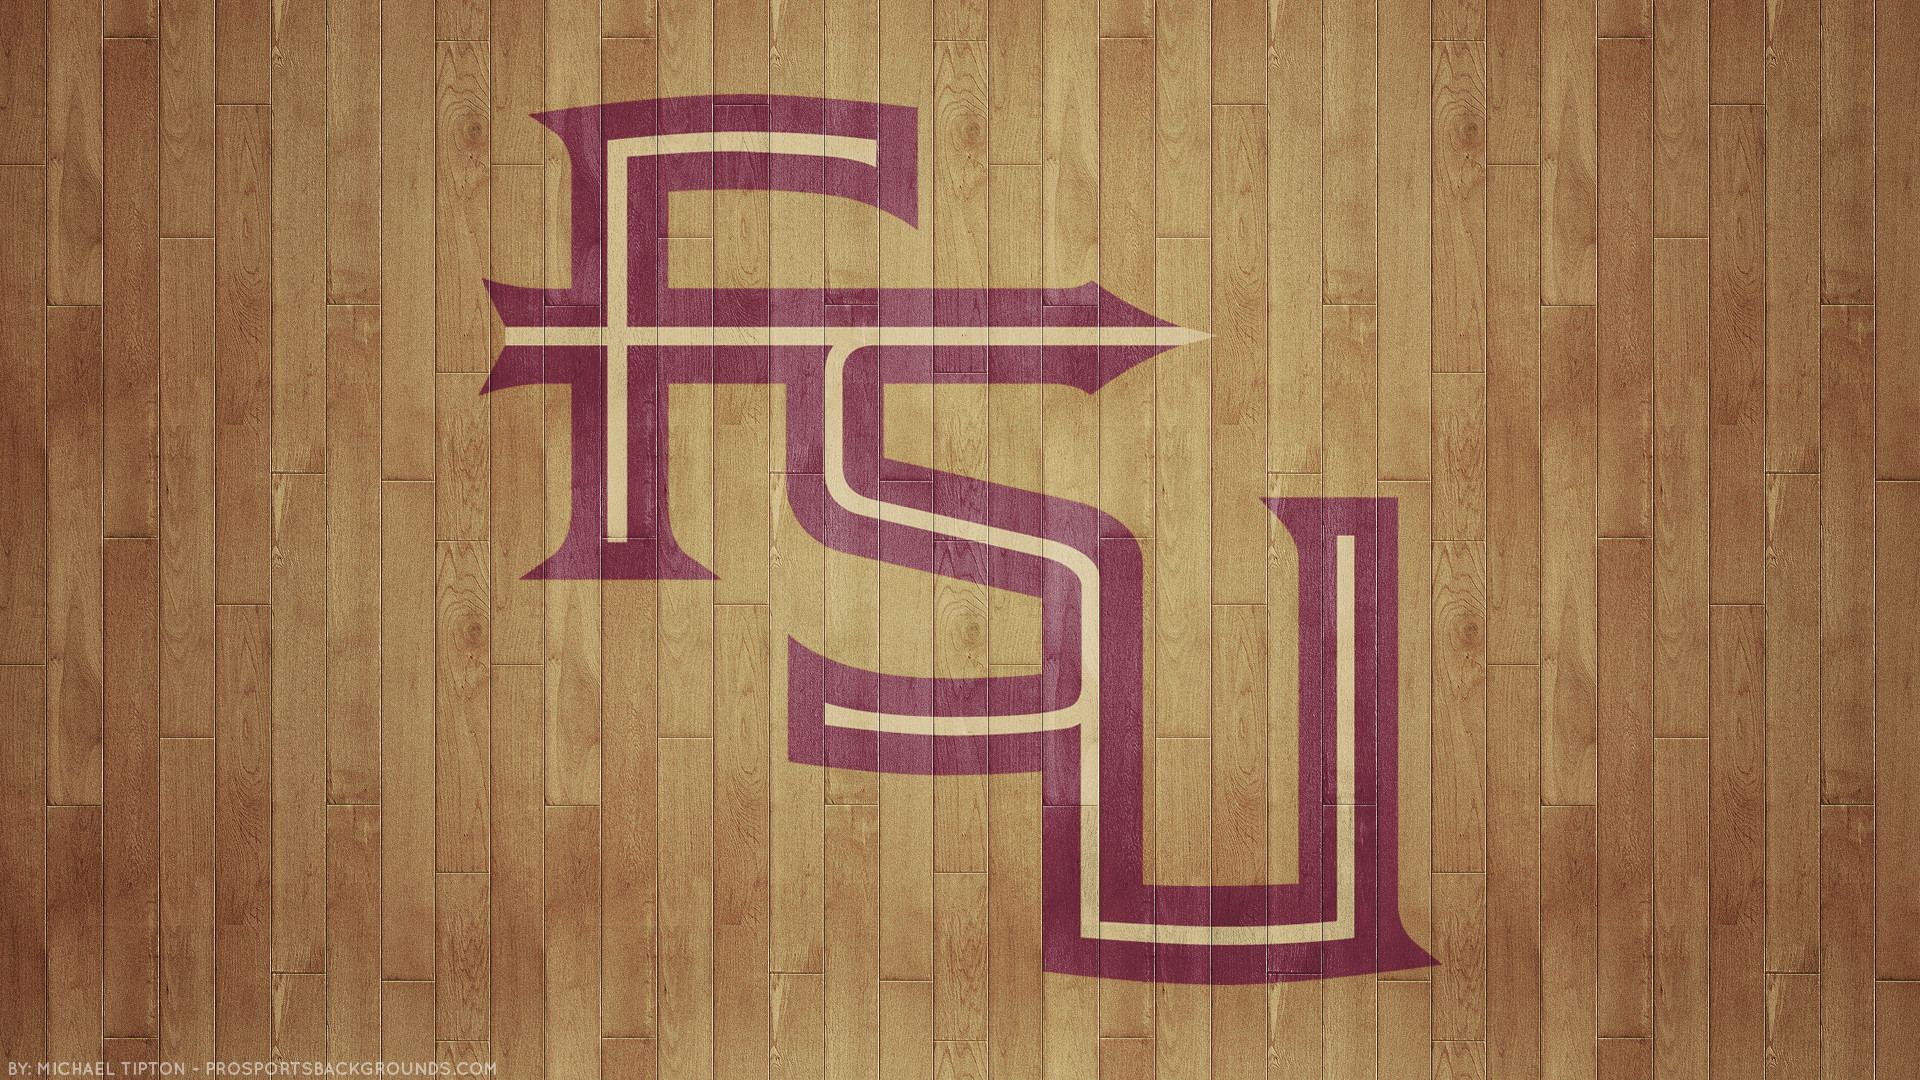 1920x1080 ... Florida State Seminoles 2018 ncaa basketball team logo hardwood  wallpaper free for mac and desktop pc